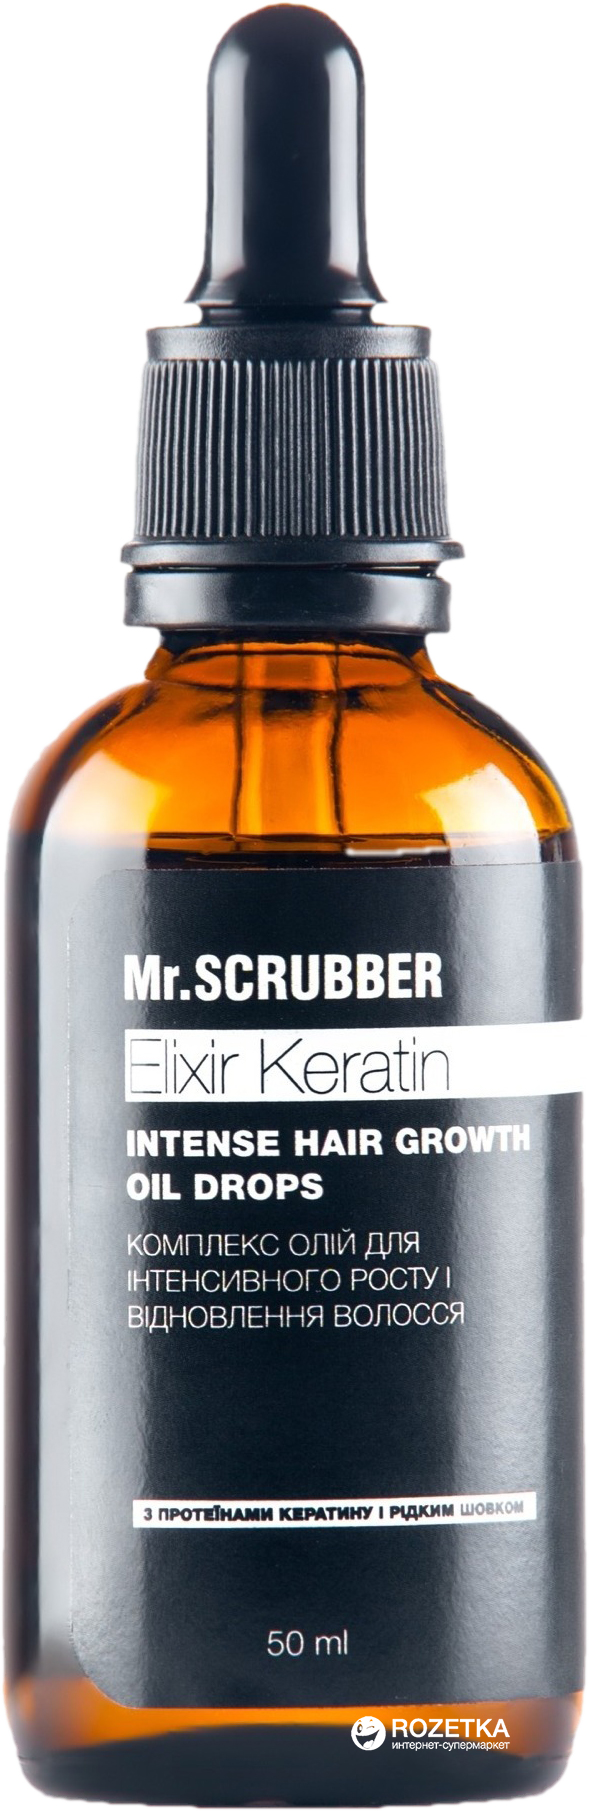 Акция на Масло для роста волос Mr.Scrubber Elixir Keratin Intence Hair Growth Oil Drops 50 мл (4820200230771) от Rozetka UA